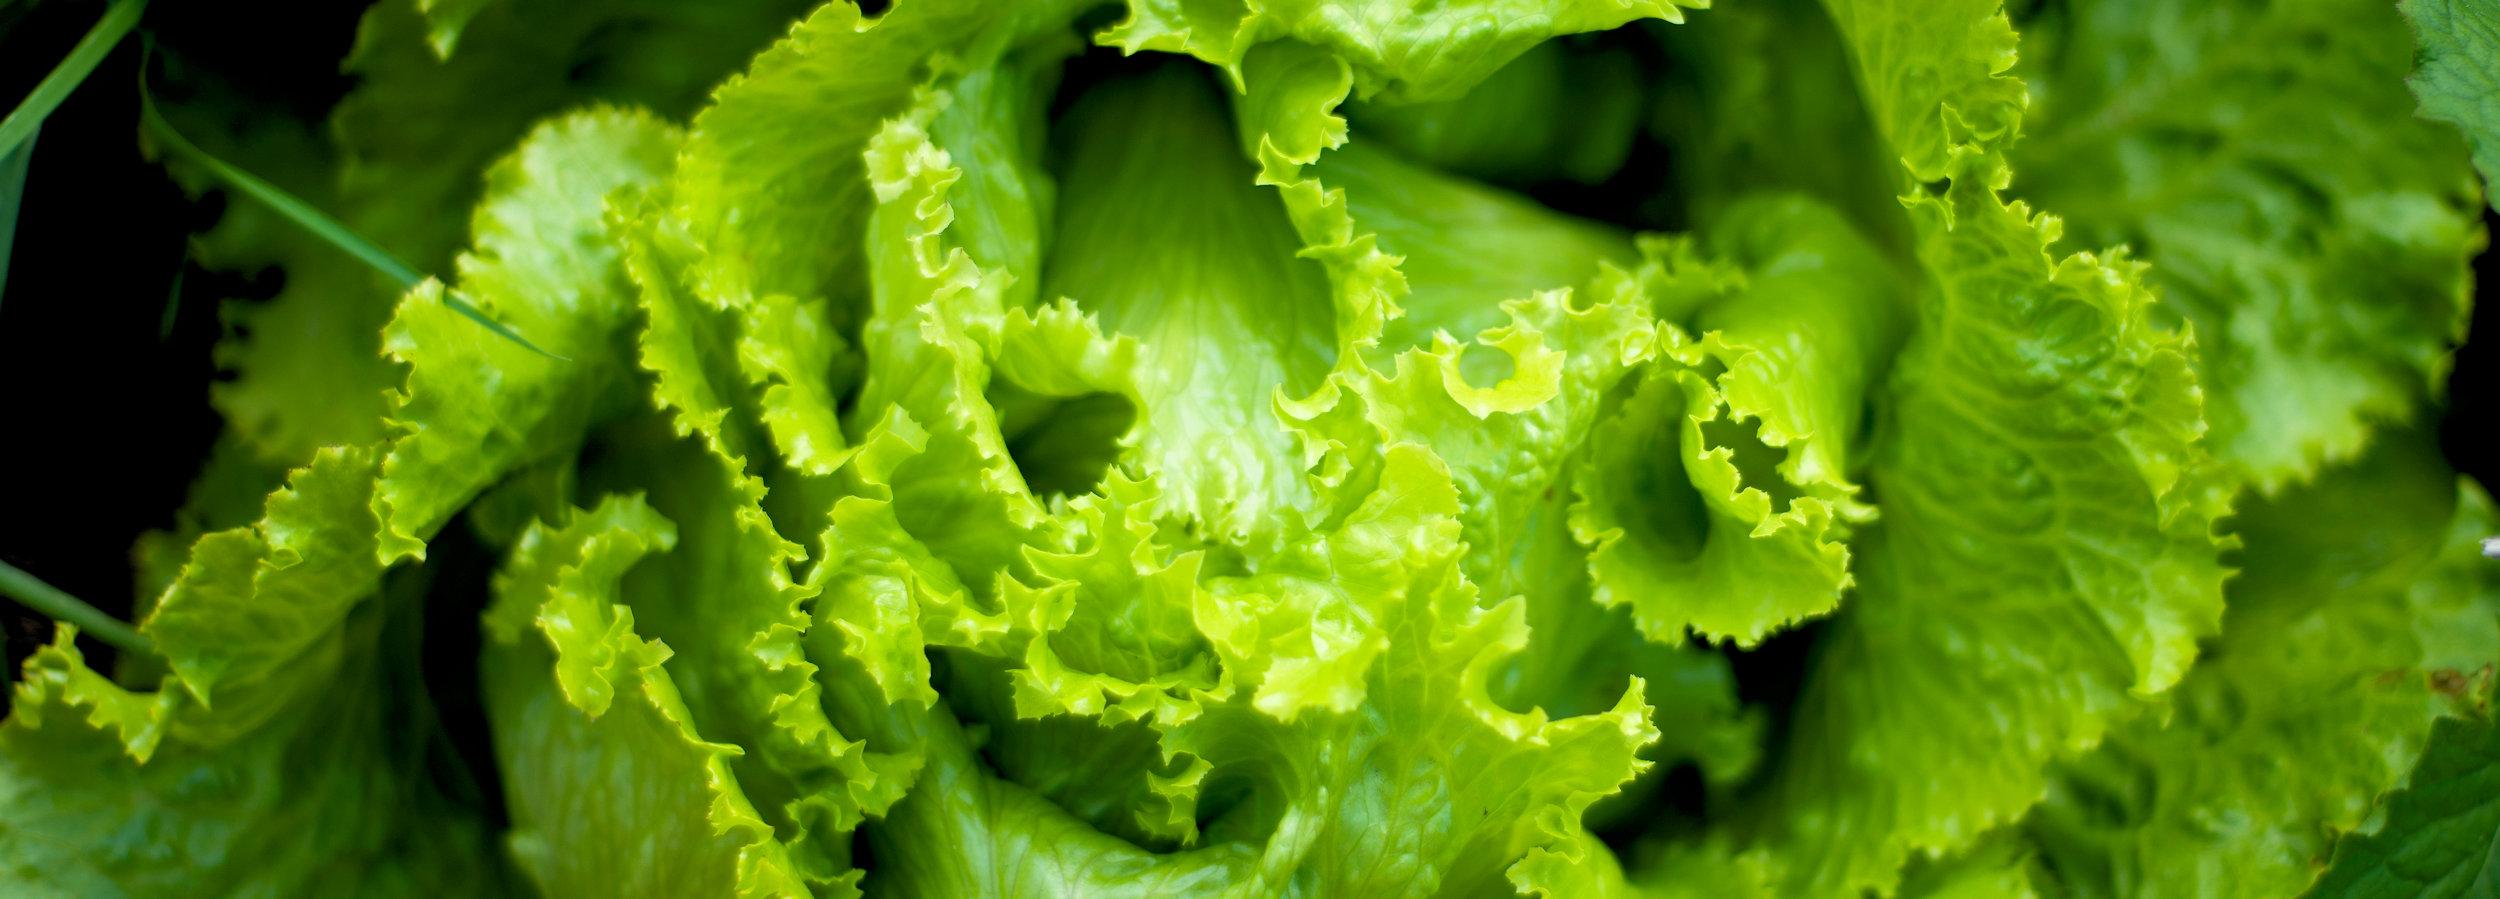 Salad lettuce